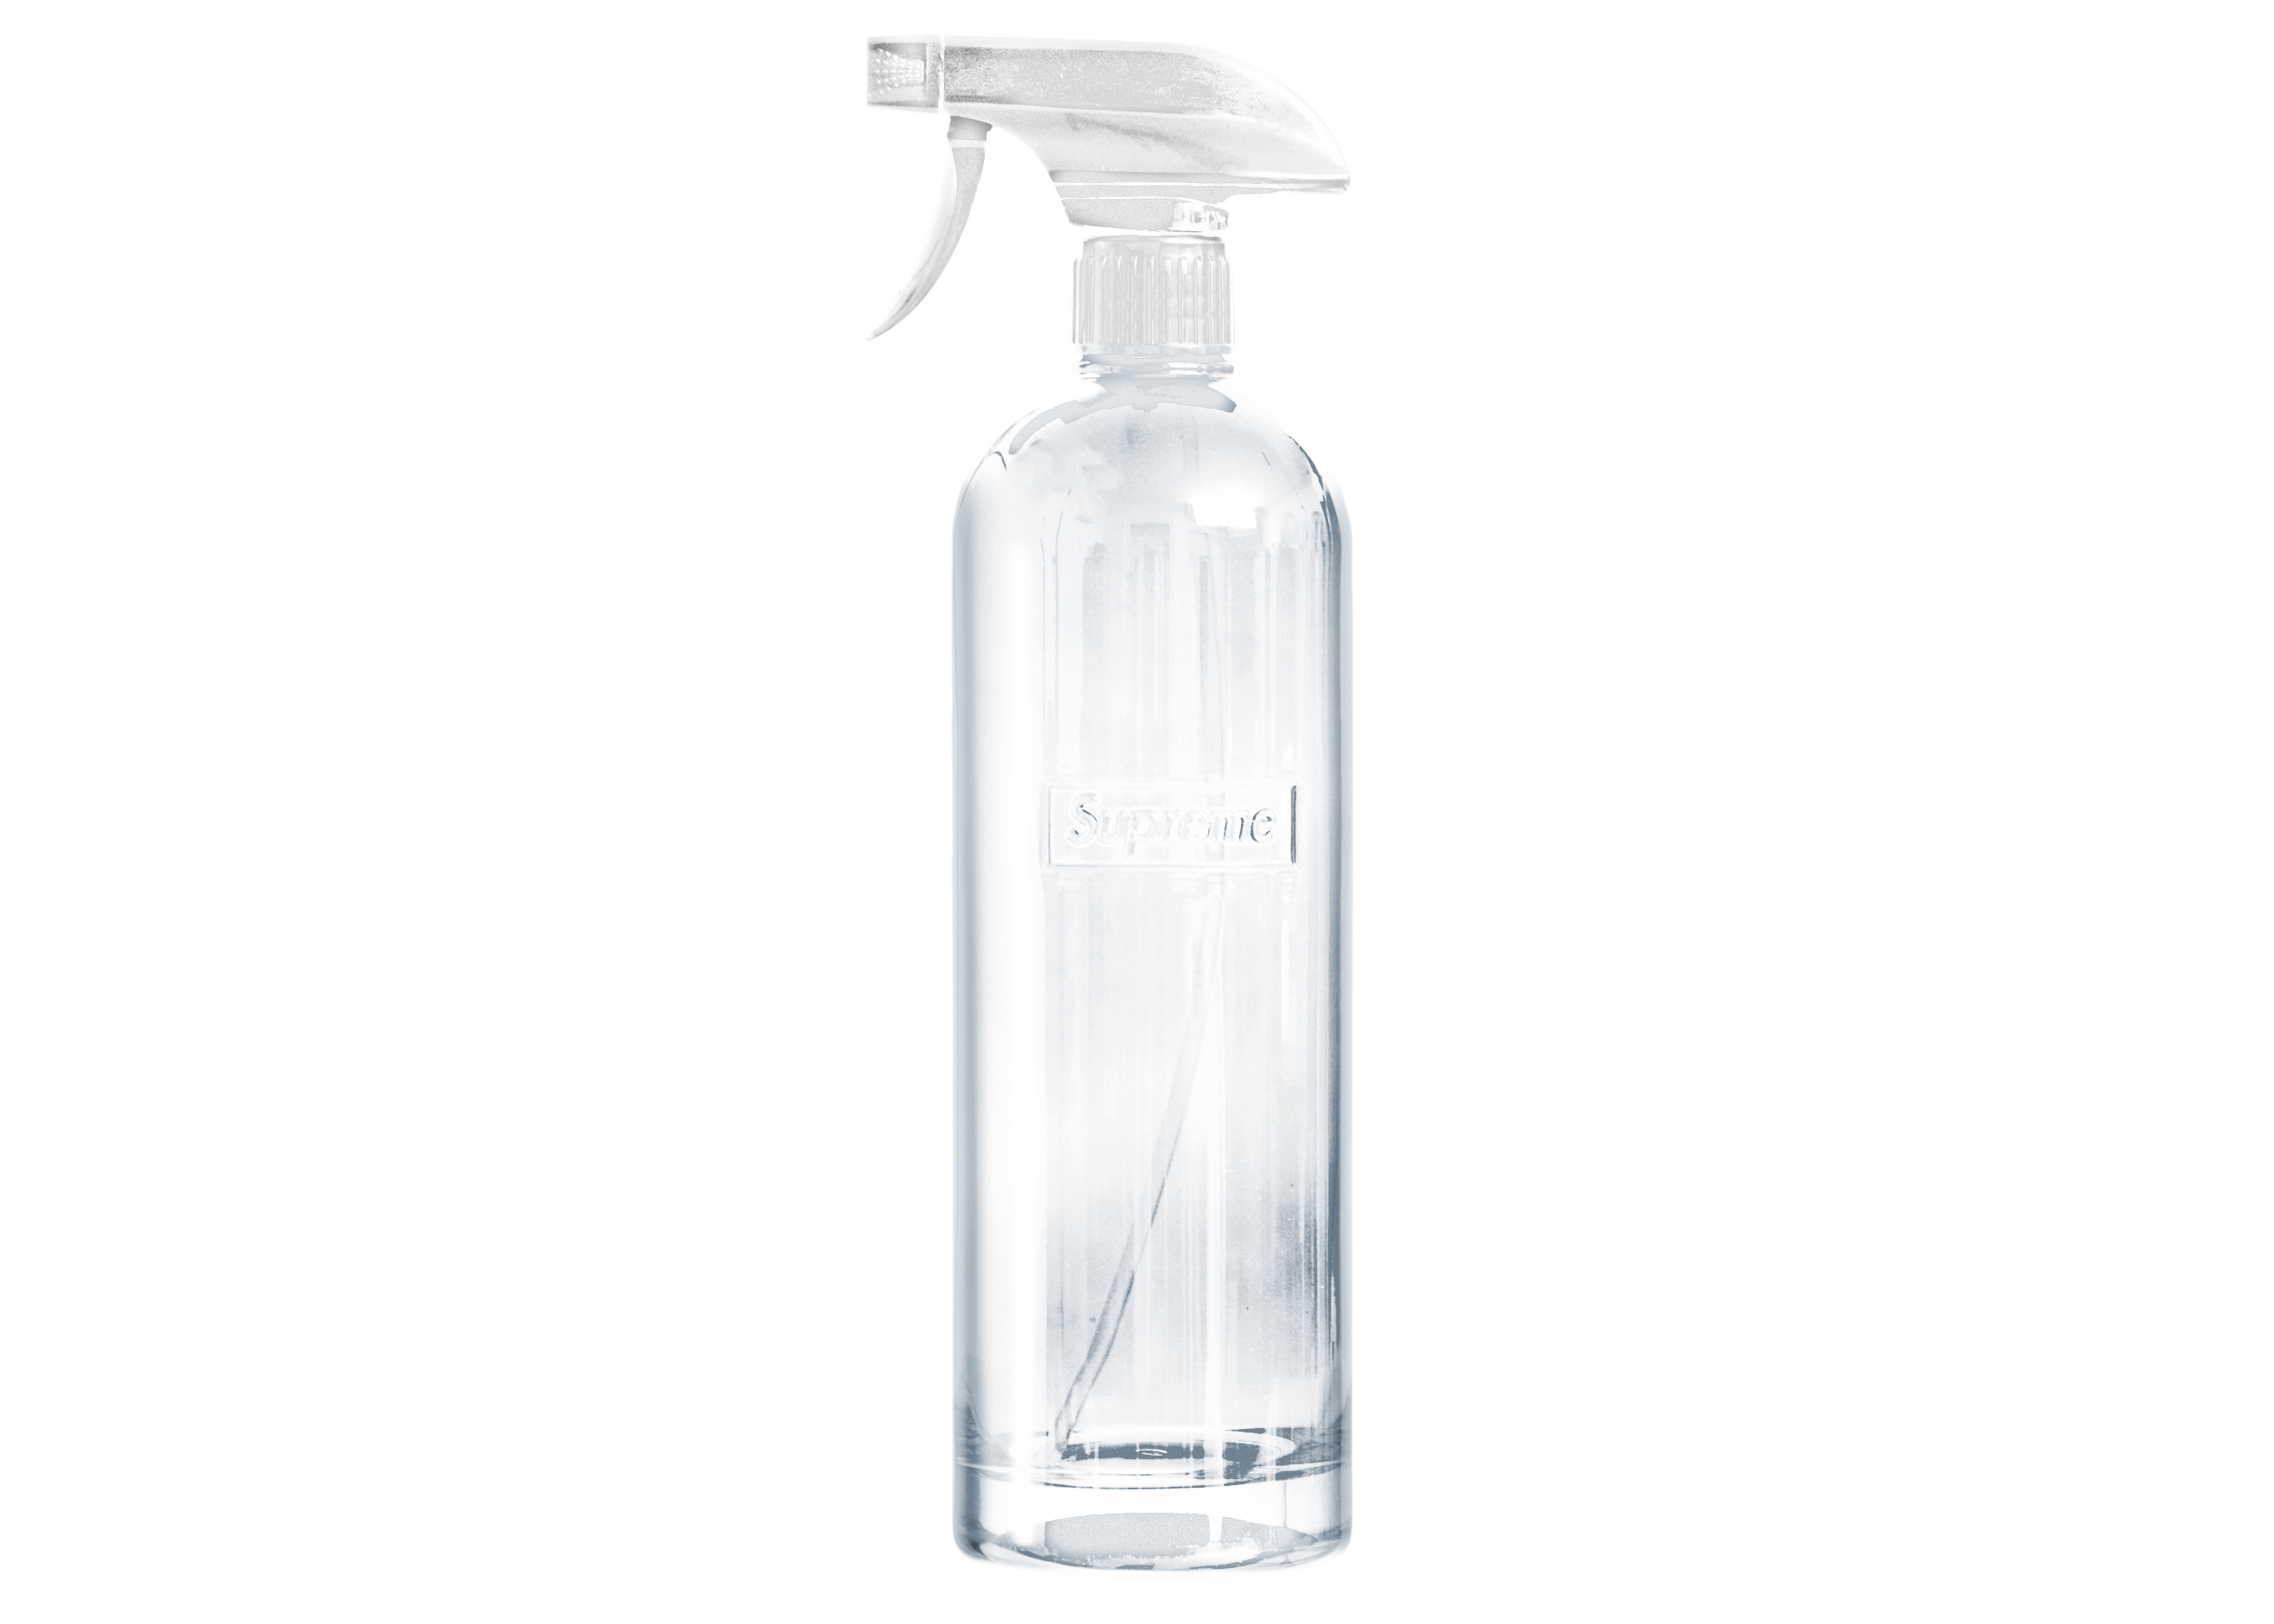 Supreme Glass Spray Bottle Clear